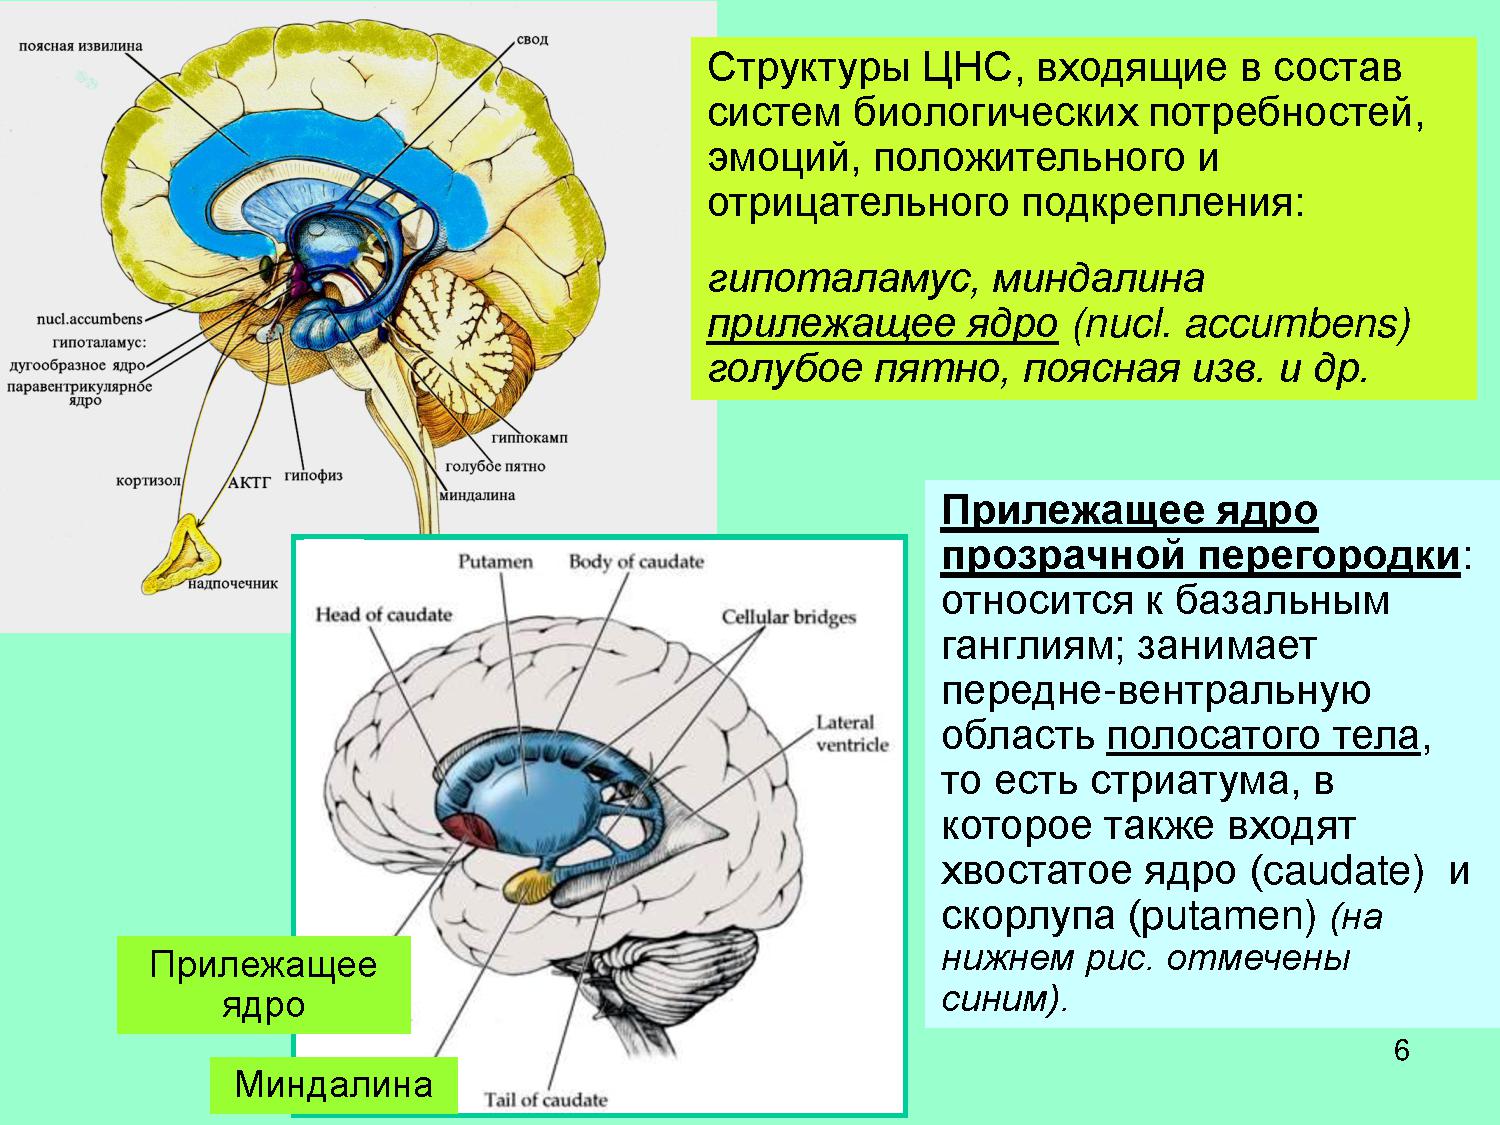 Другое название ядра. Прилежащее ядро головного мозга. Прилежащее ядро прозрачной перегородки. Хвостатое ядро мозга строение. Функции хвостатого ядра головного мозга.